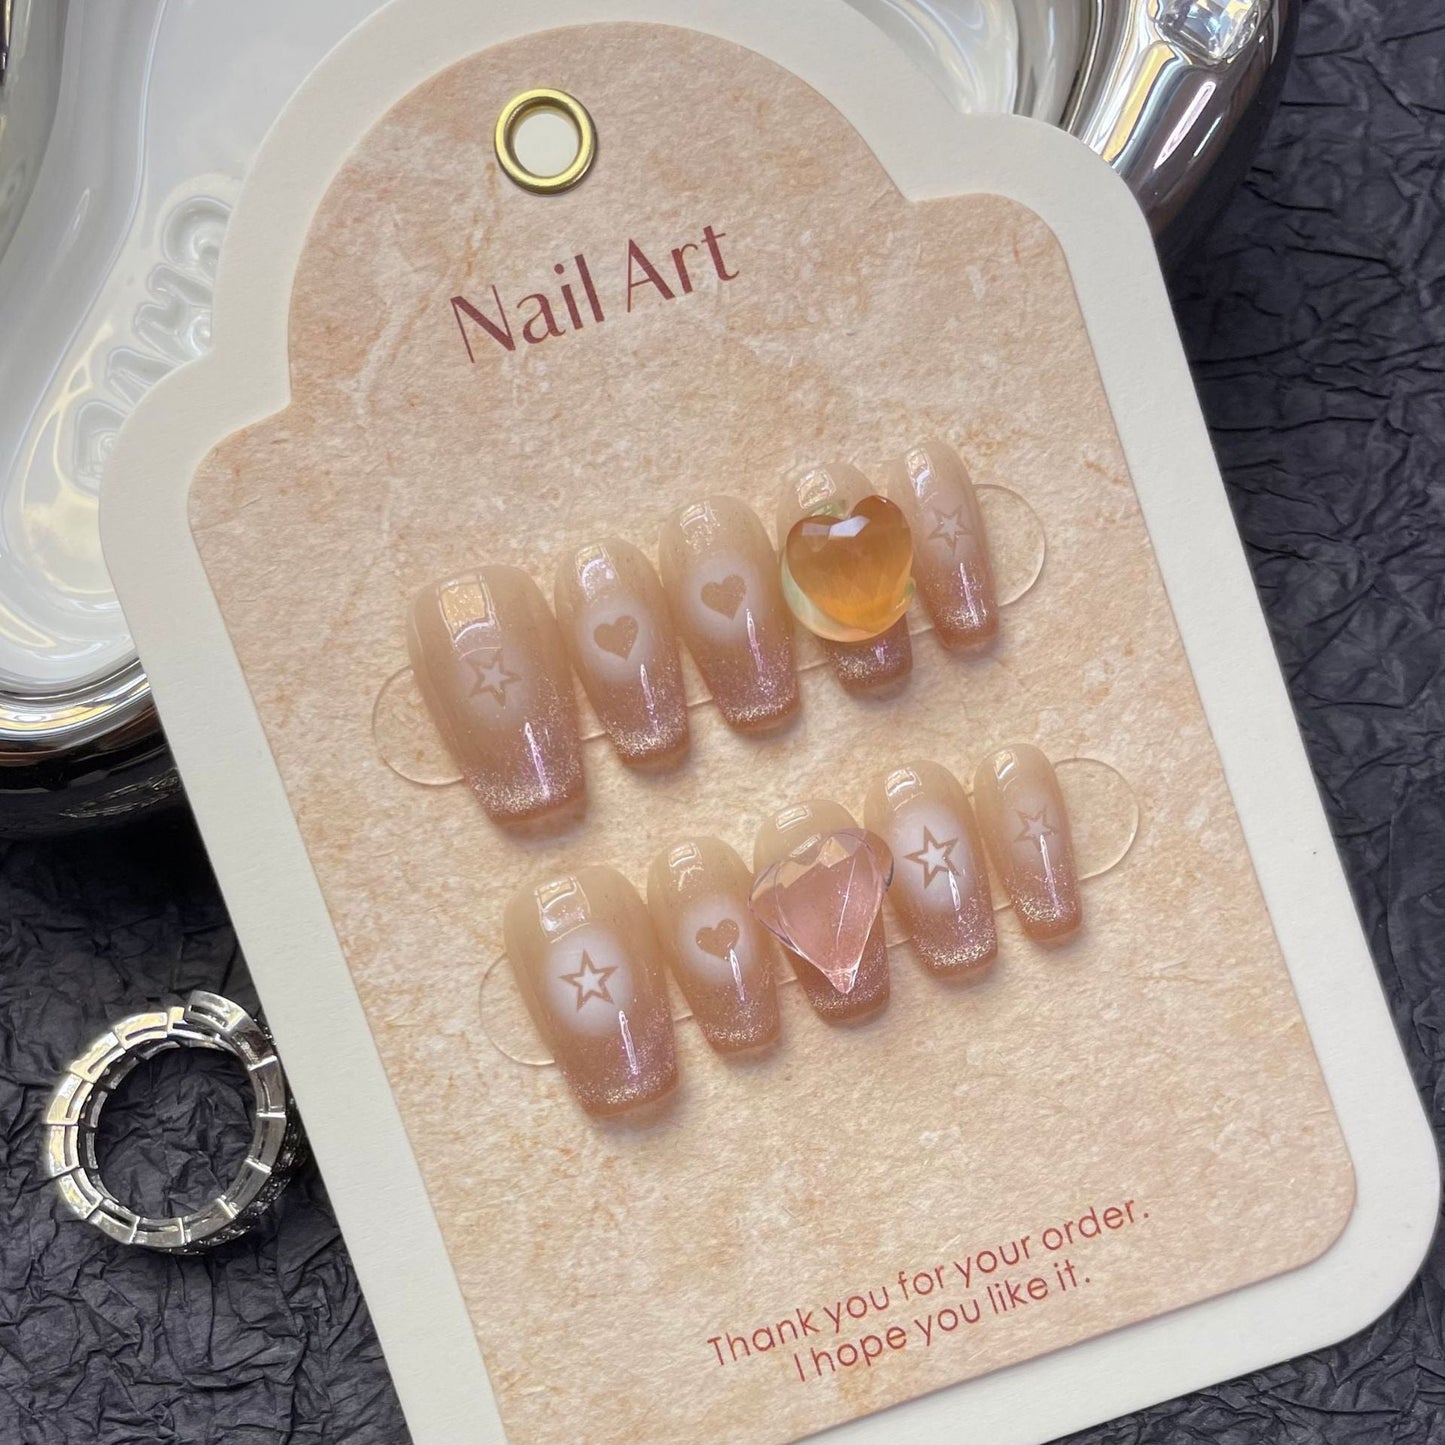 1237 star style press on nails 100% handmade false nails nude color